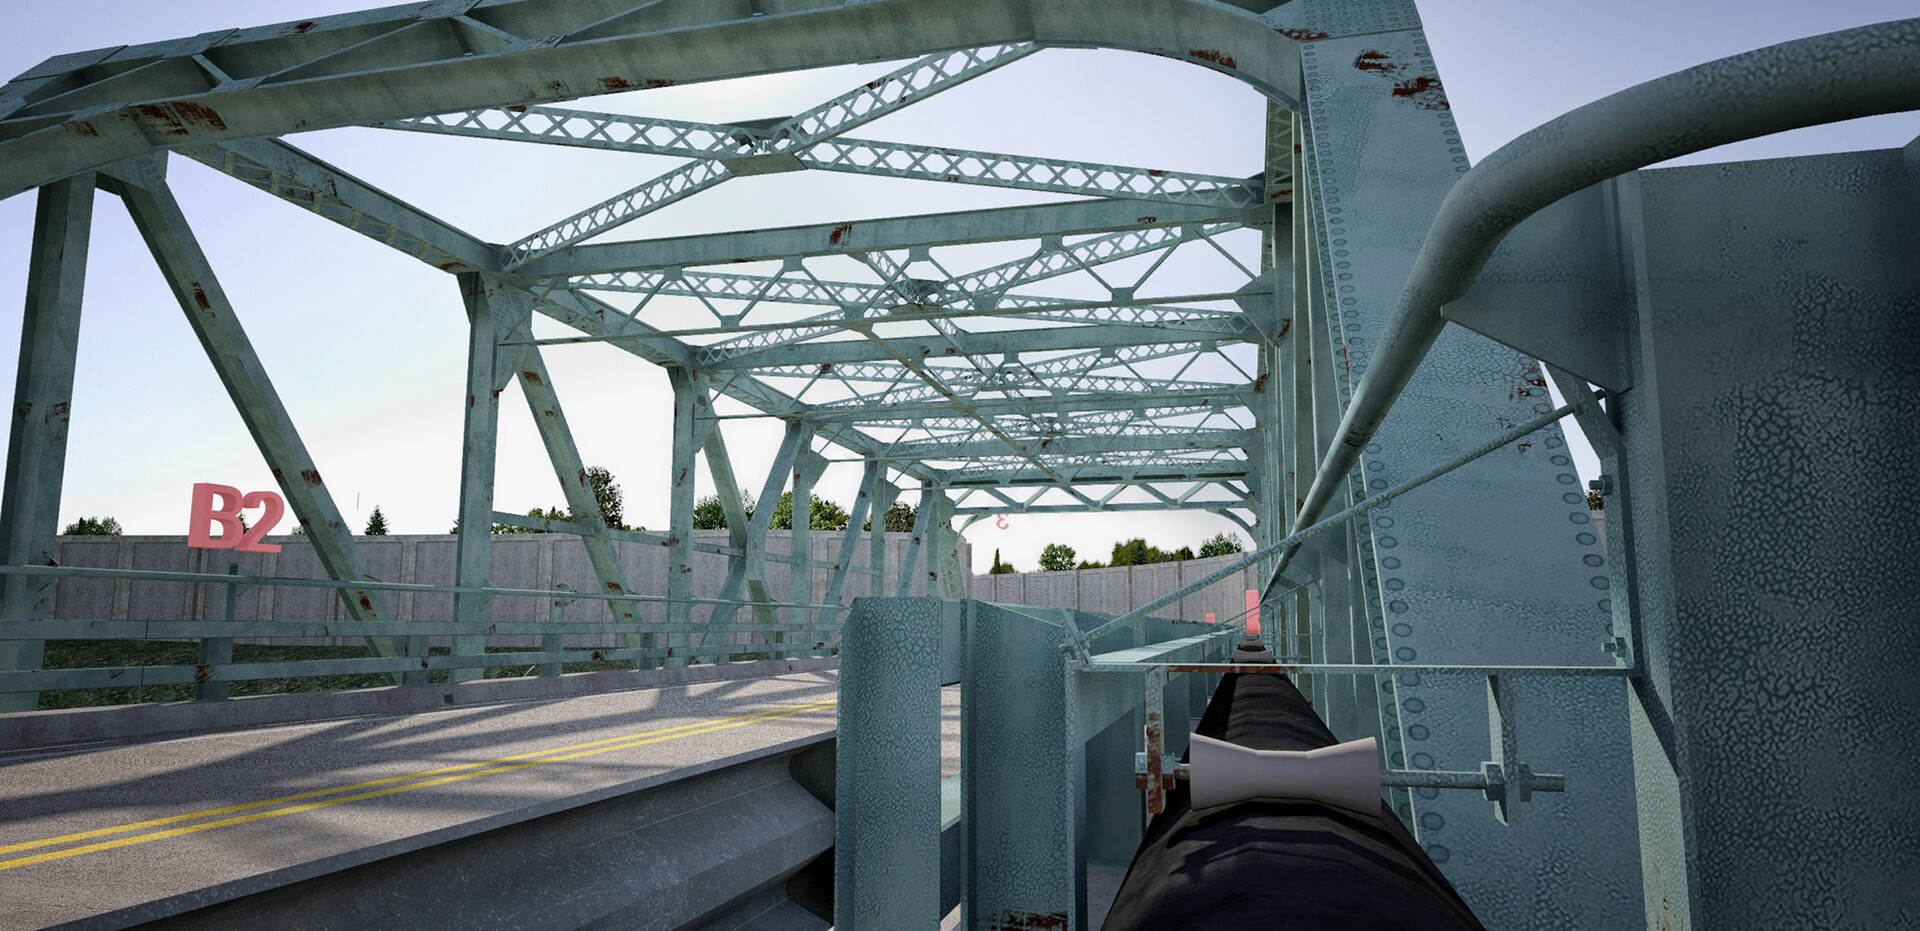 ArtStation - Virtual Bridge Inspection - Steel Truss Bridge